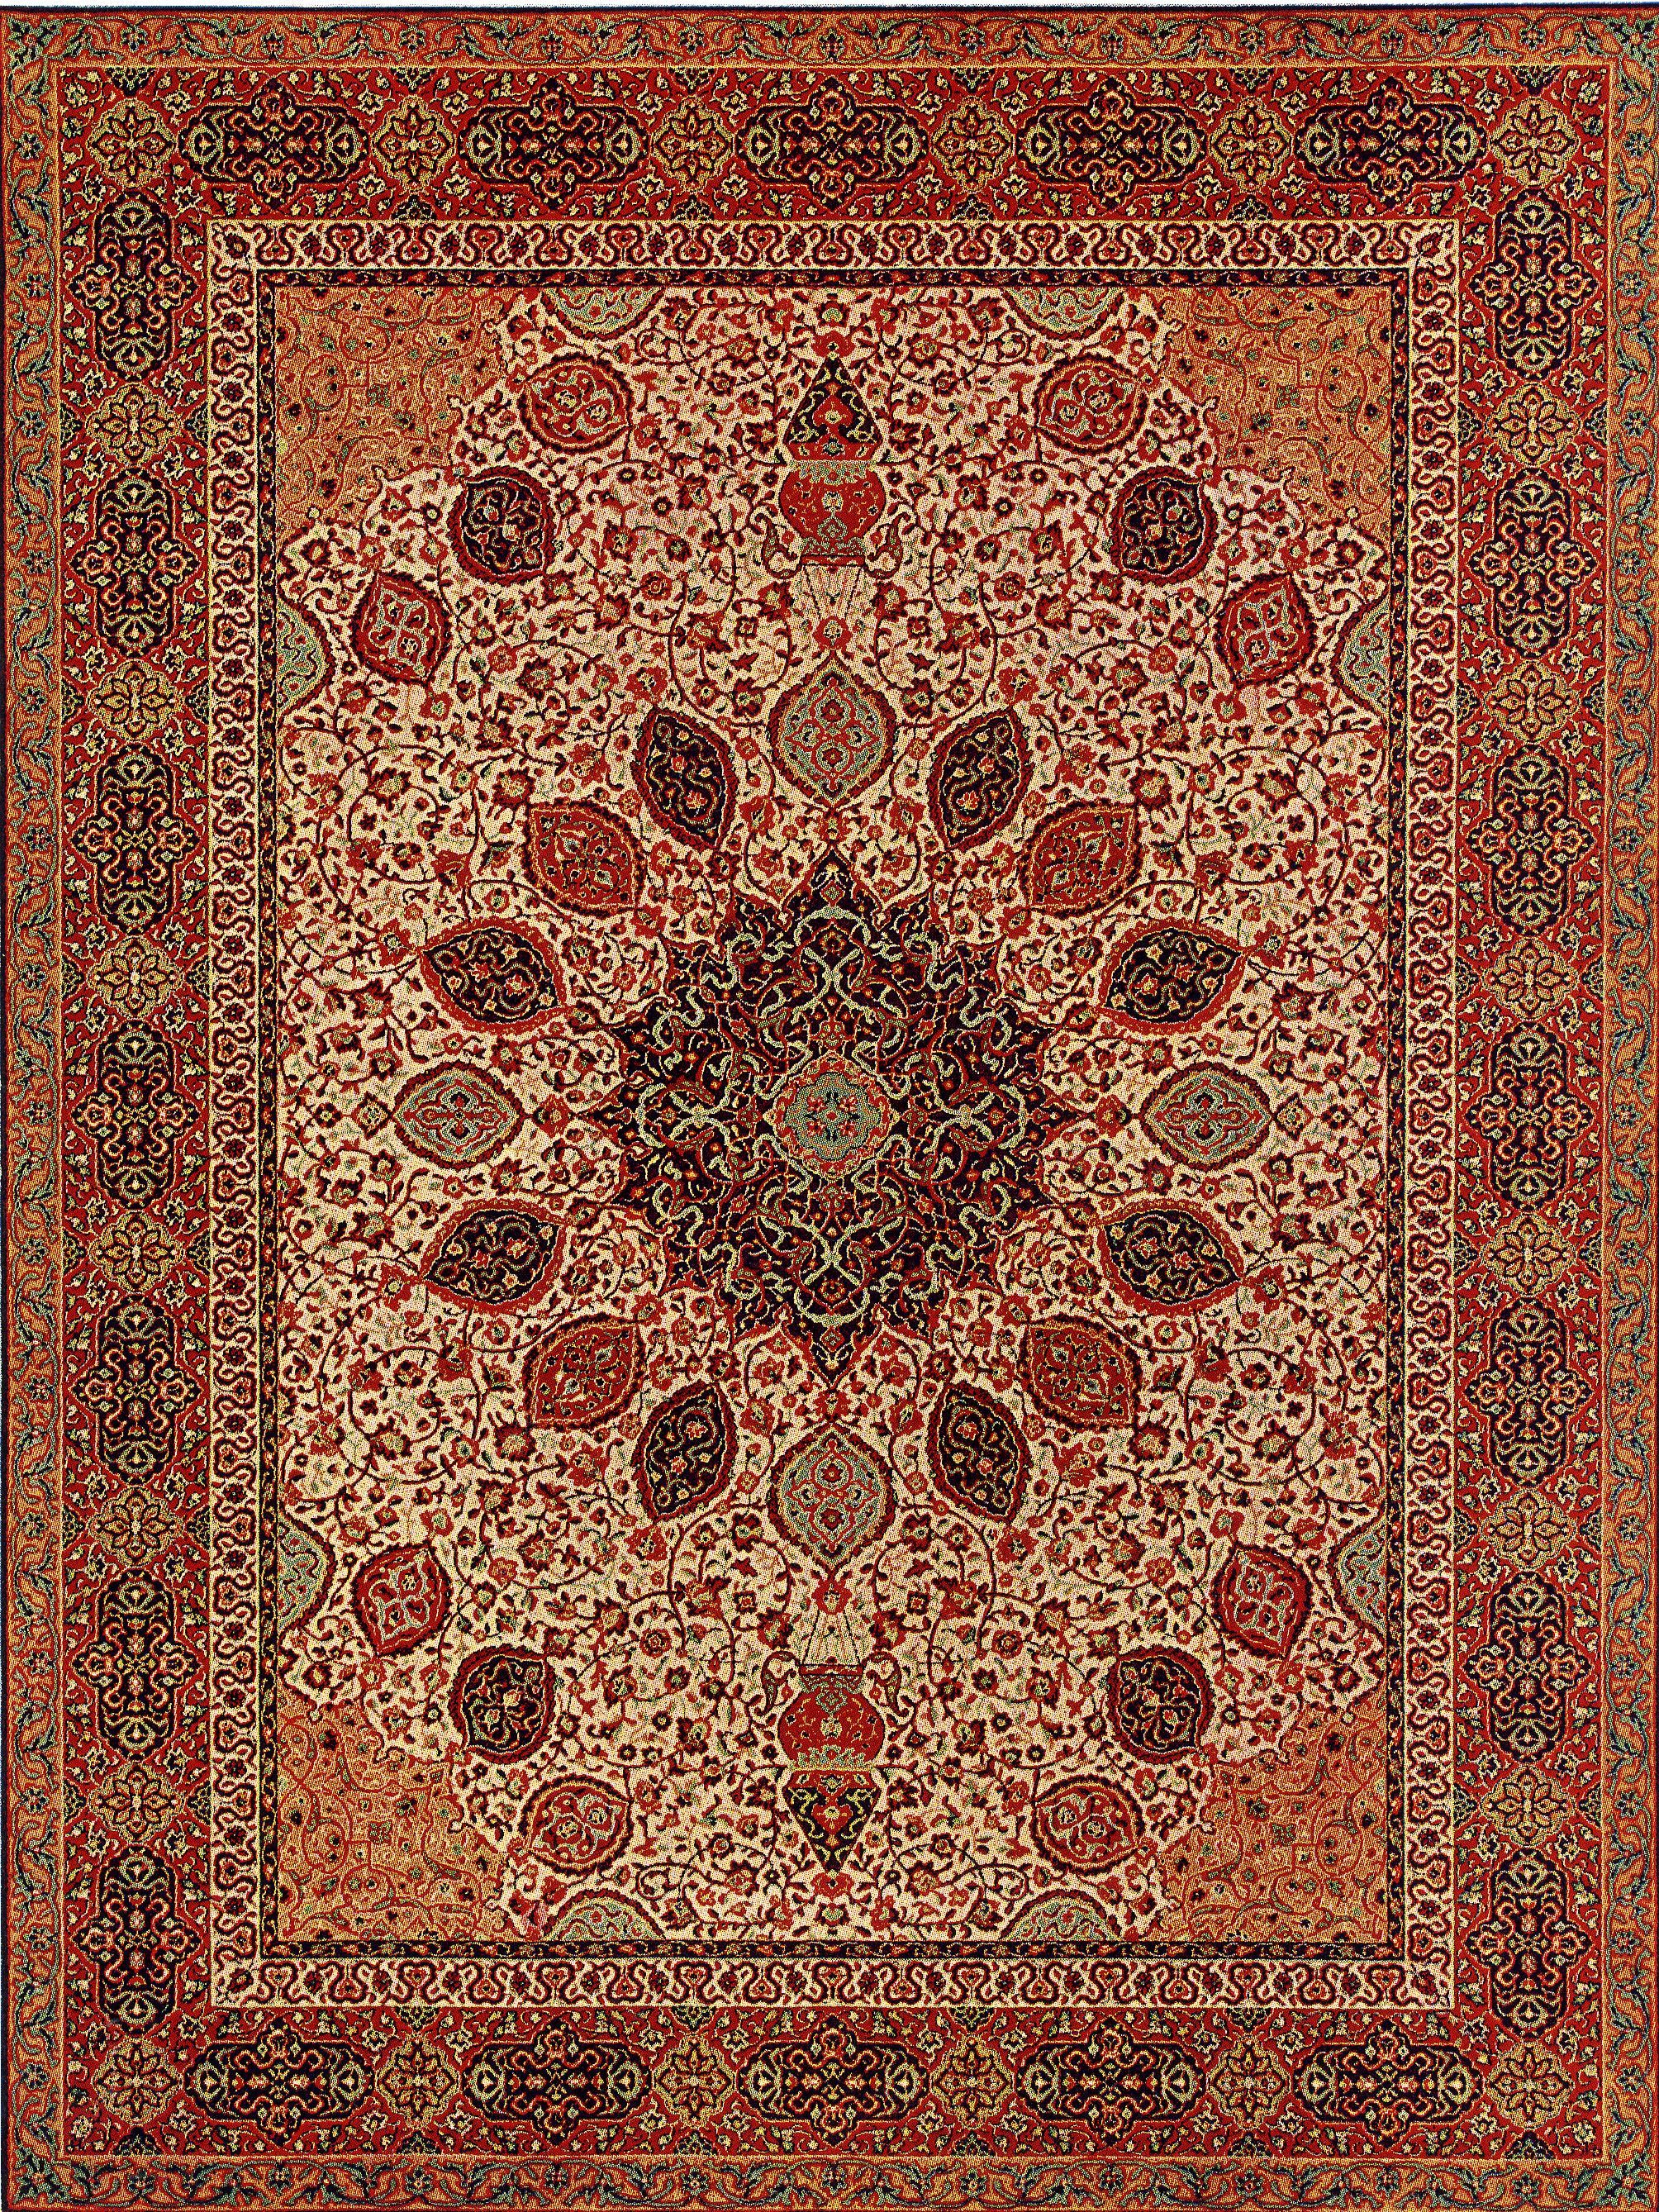 3008x2266px Red Carpet (2034.37 KB).07.2015